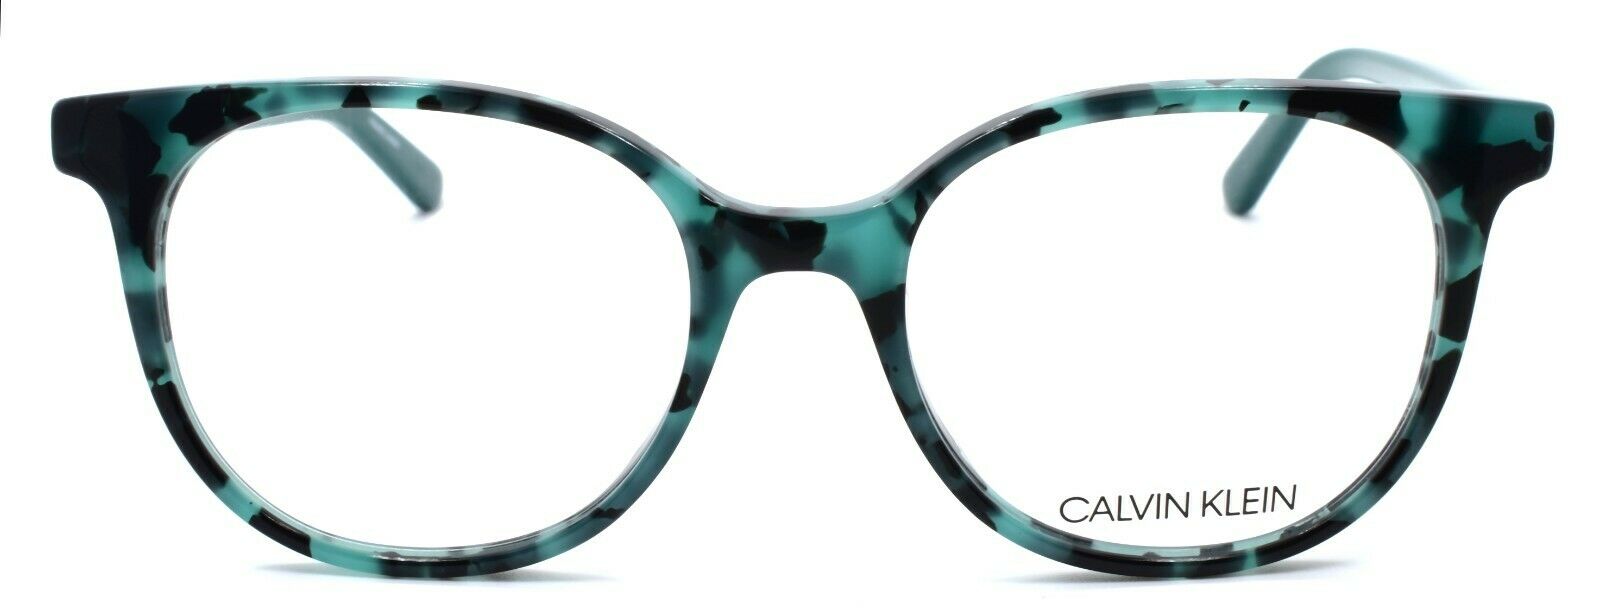 2-Calvin Klein CK18538 352 Women's Eyeglasses Frames 50-18-135 Jade Tortoise Green-883901105087-IKSpecs